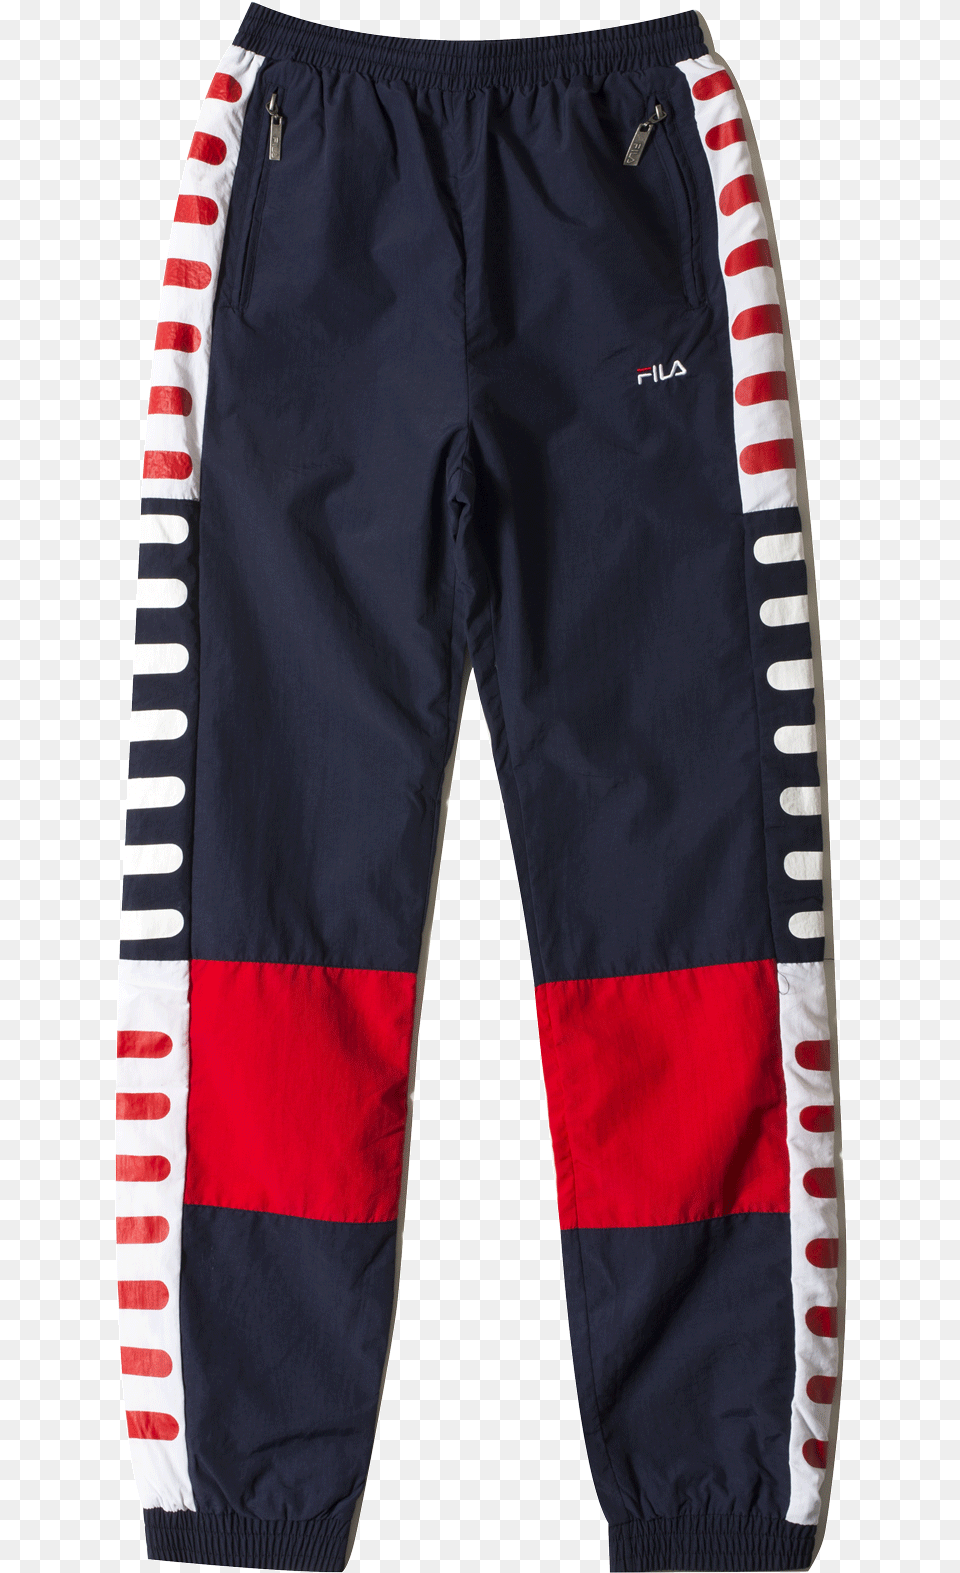 Caleb Woven Pants Clothing, Shorts, Coat, Swimming Trunks Png Image